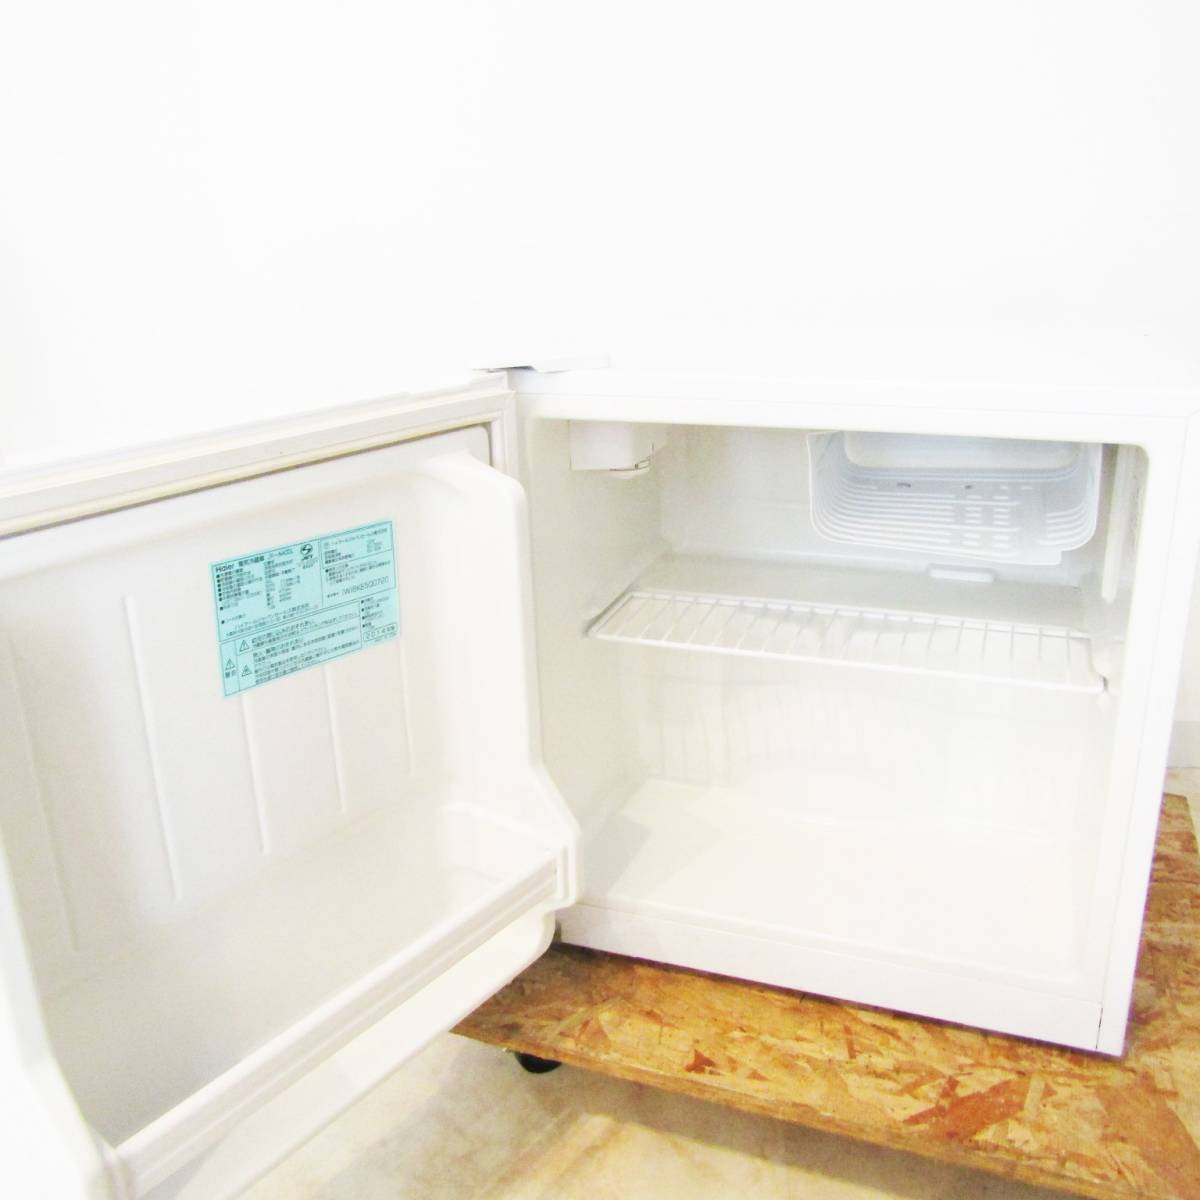 QB7199 Haier ハイアール 1ドア冷蔵庫 40L JR-N40DL 40L 2014年製 ホワイト コンパクト 小型 家庭用 家電 中古 福井 リサイクル_画像8